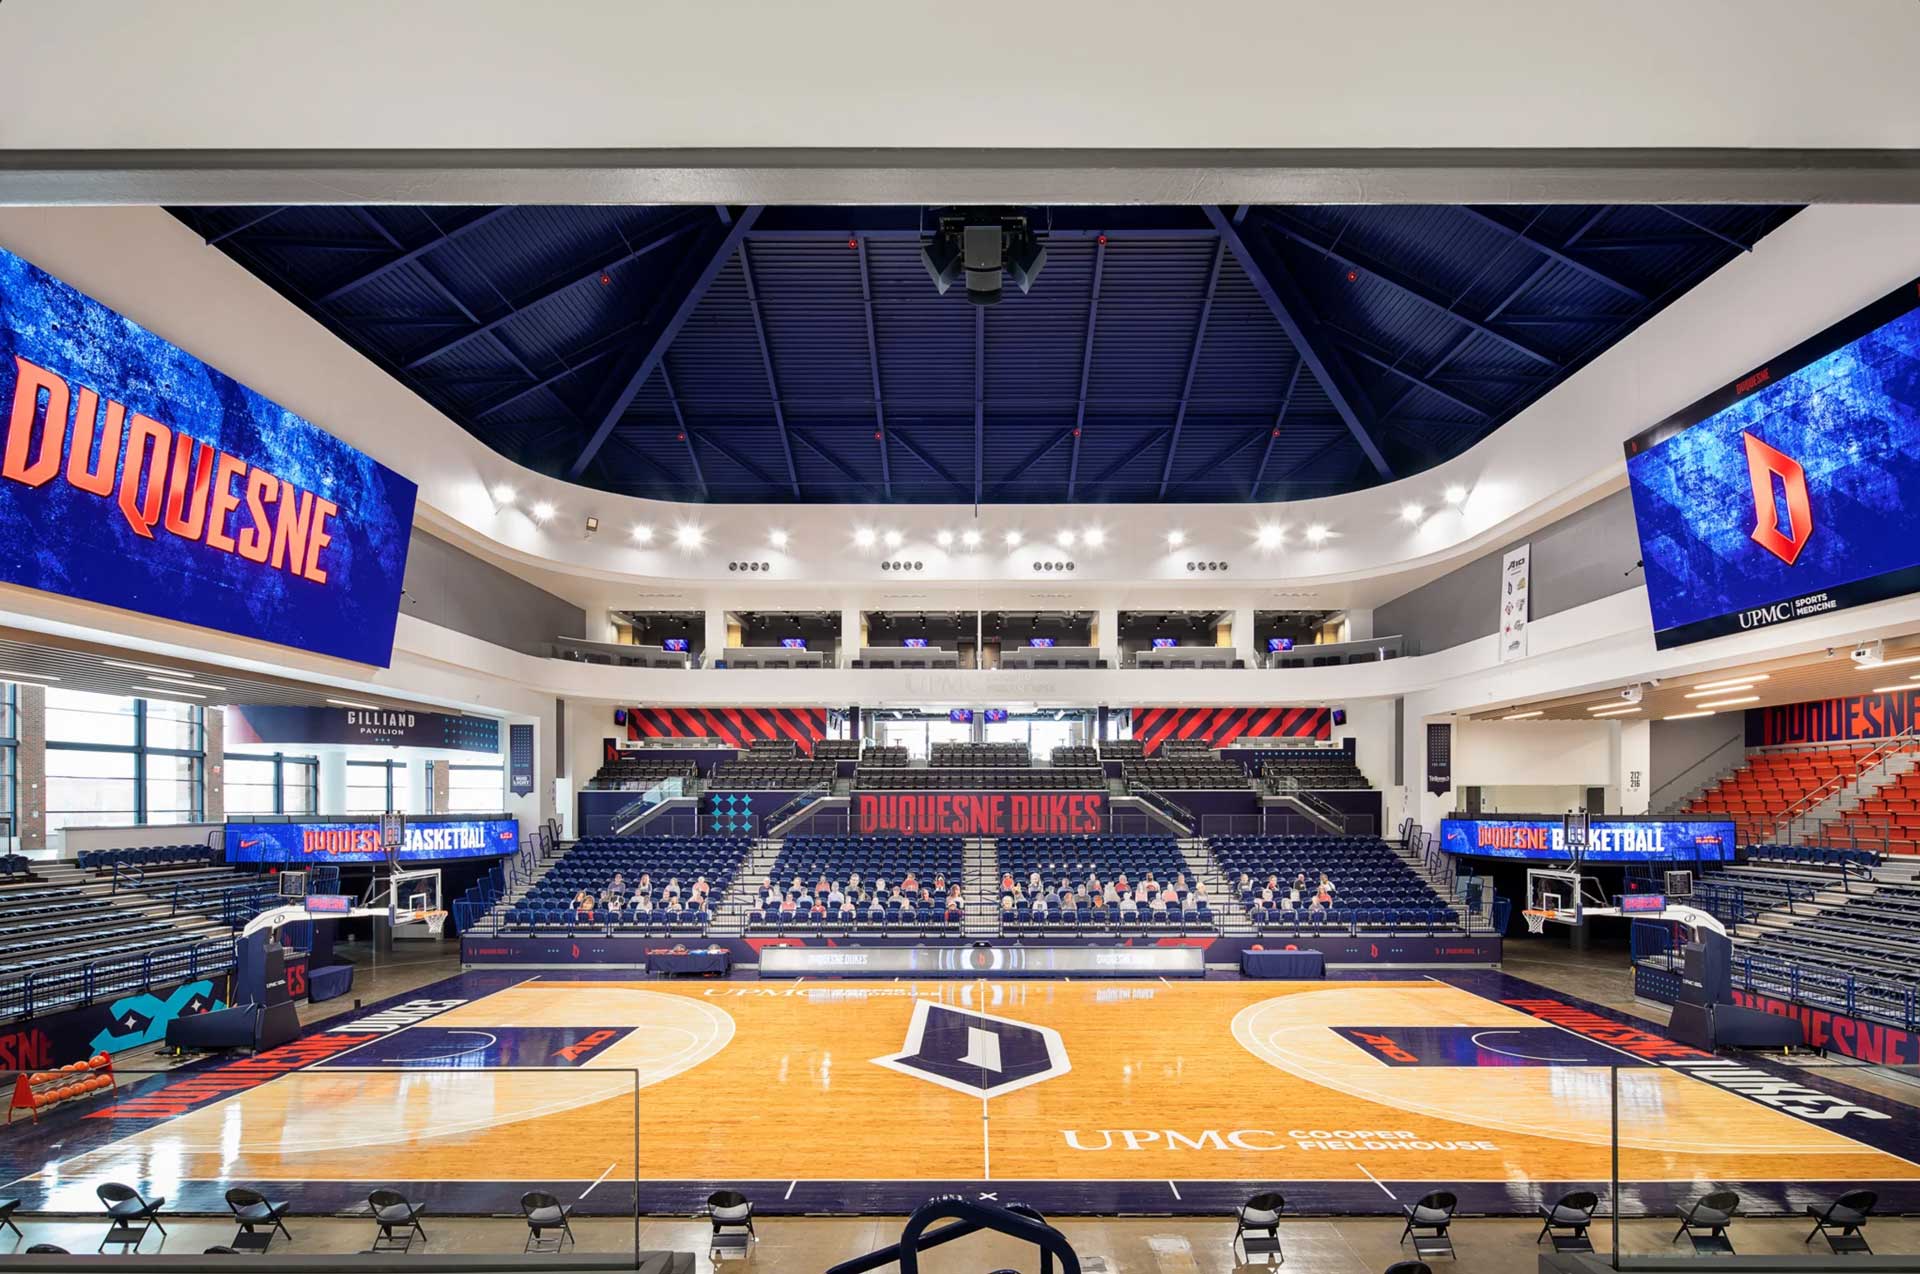 Interior basketball court image